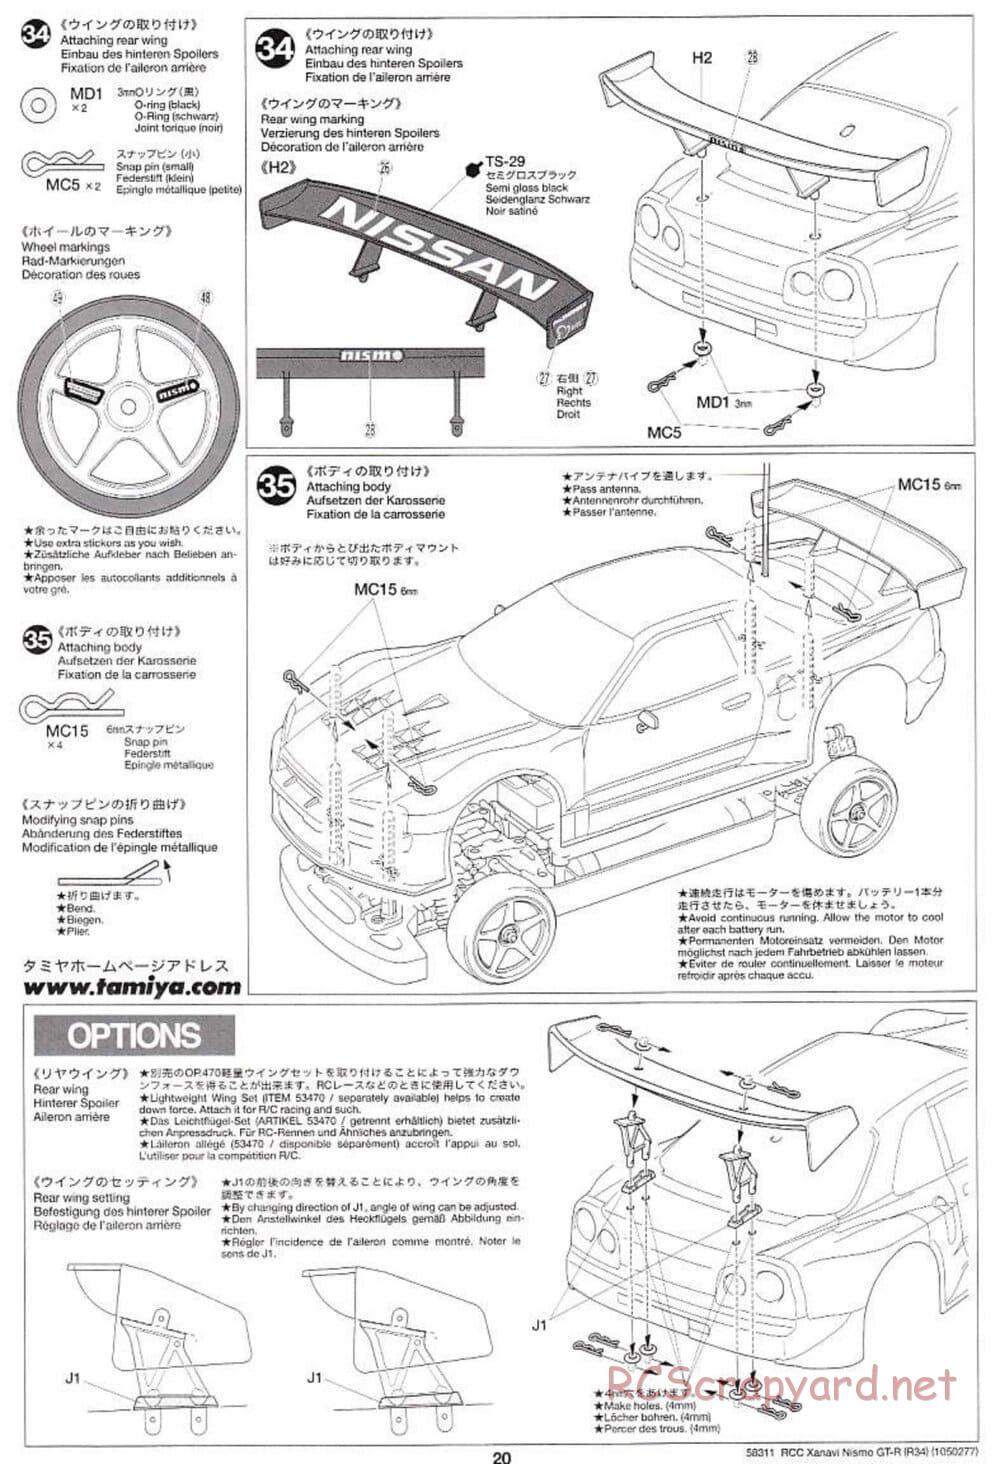 Tamiya - Xanavi Nismo GT-R (R34) - TB-02 Chassis - Manual - Page 20